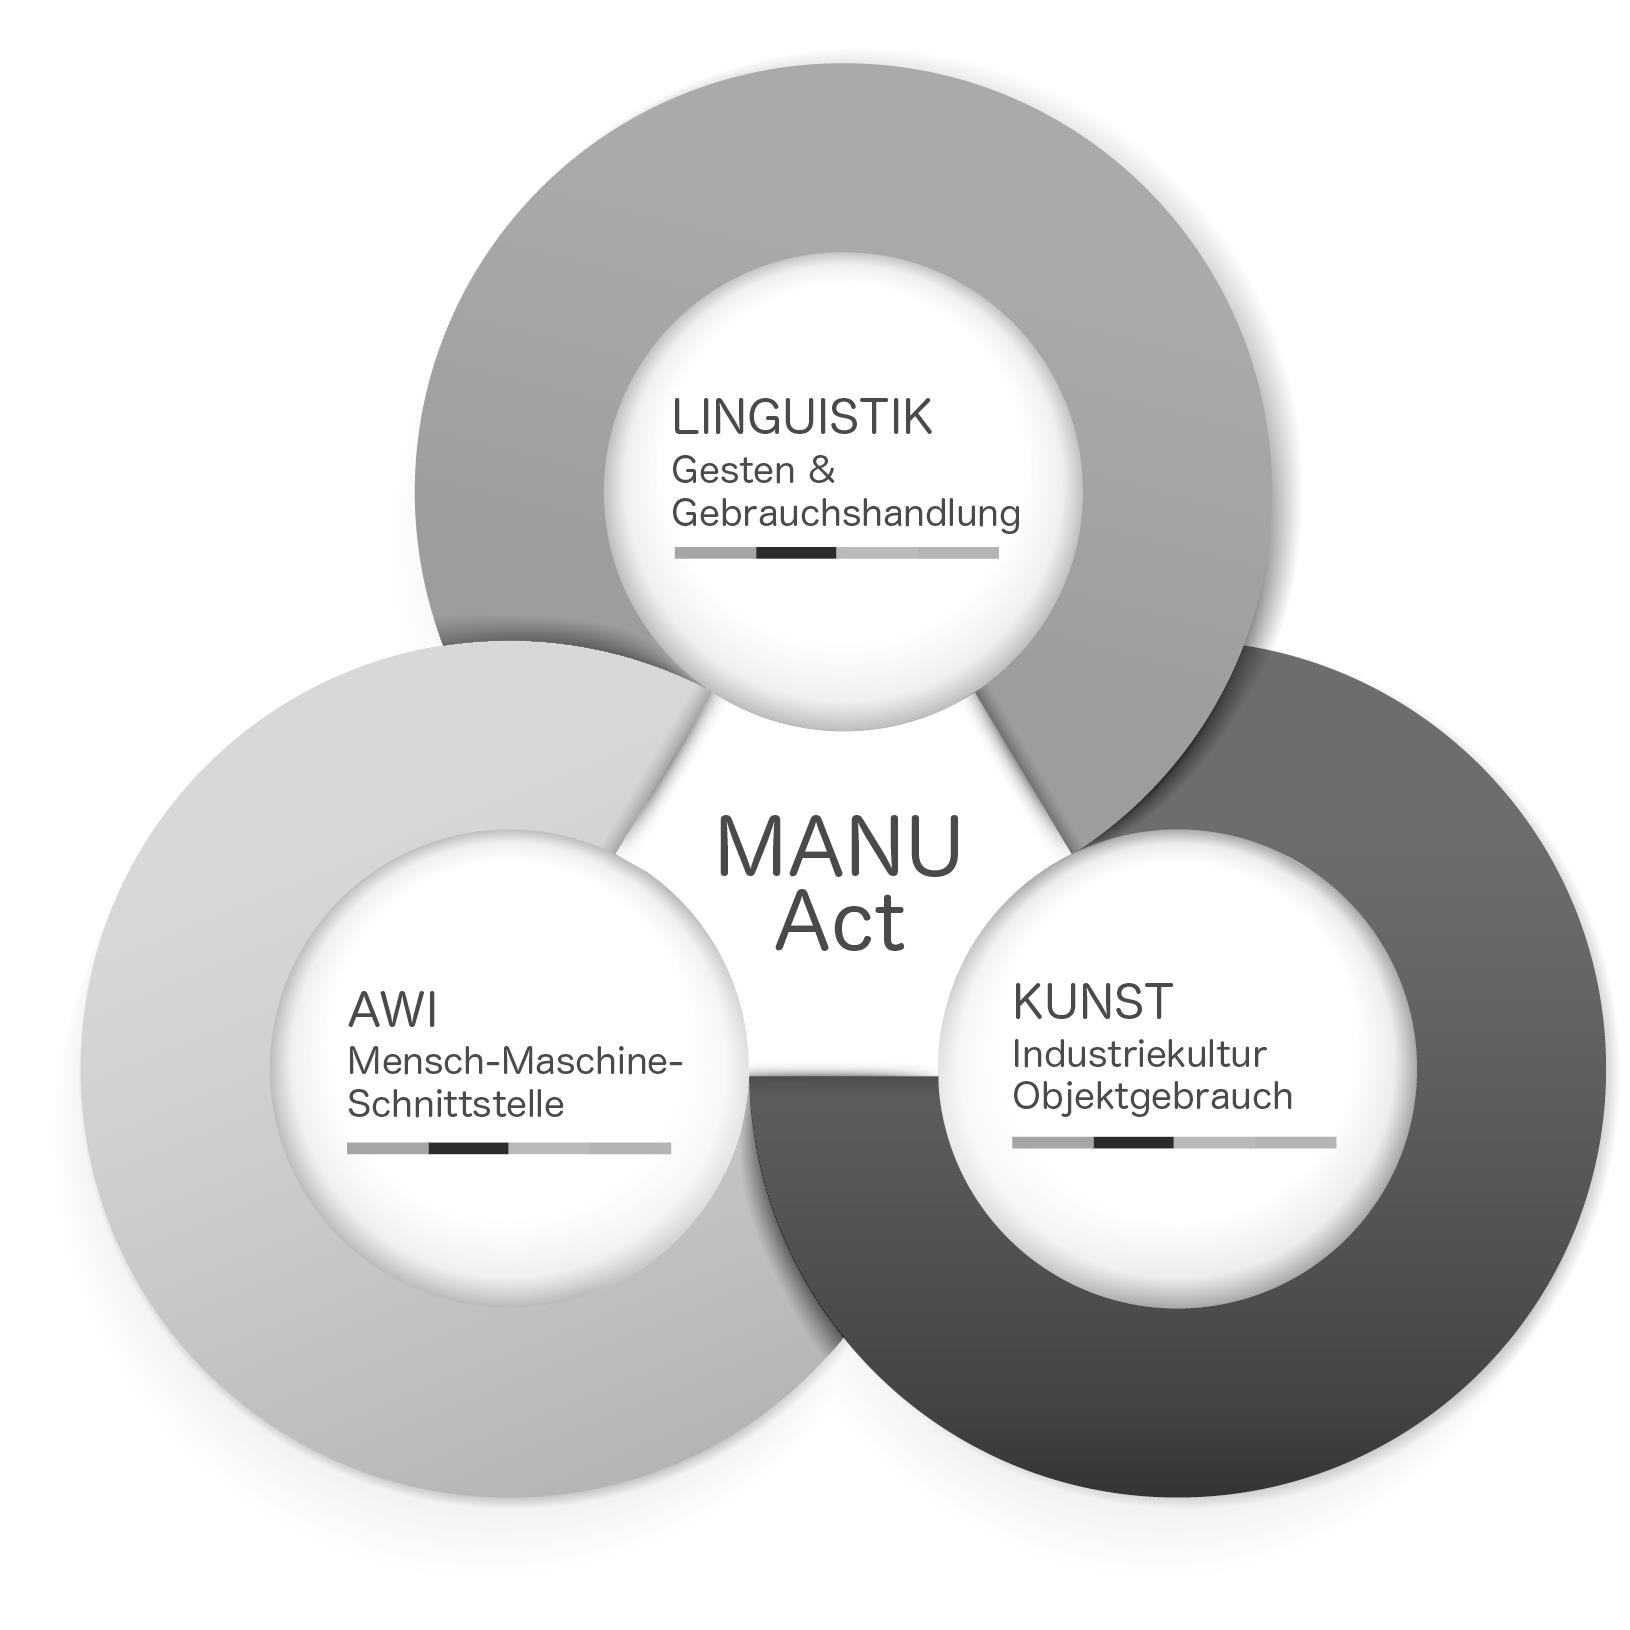 MANUAct-Logo (Linguistik-Awi-Kunst)